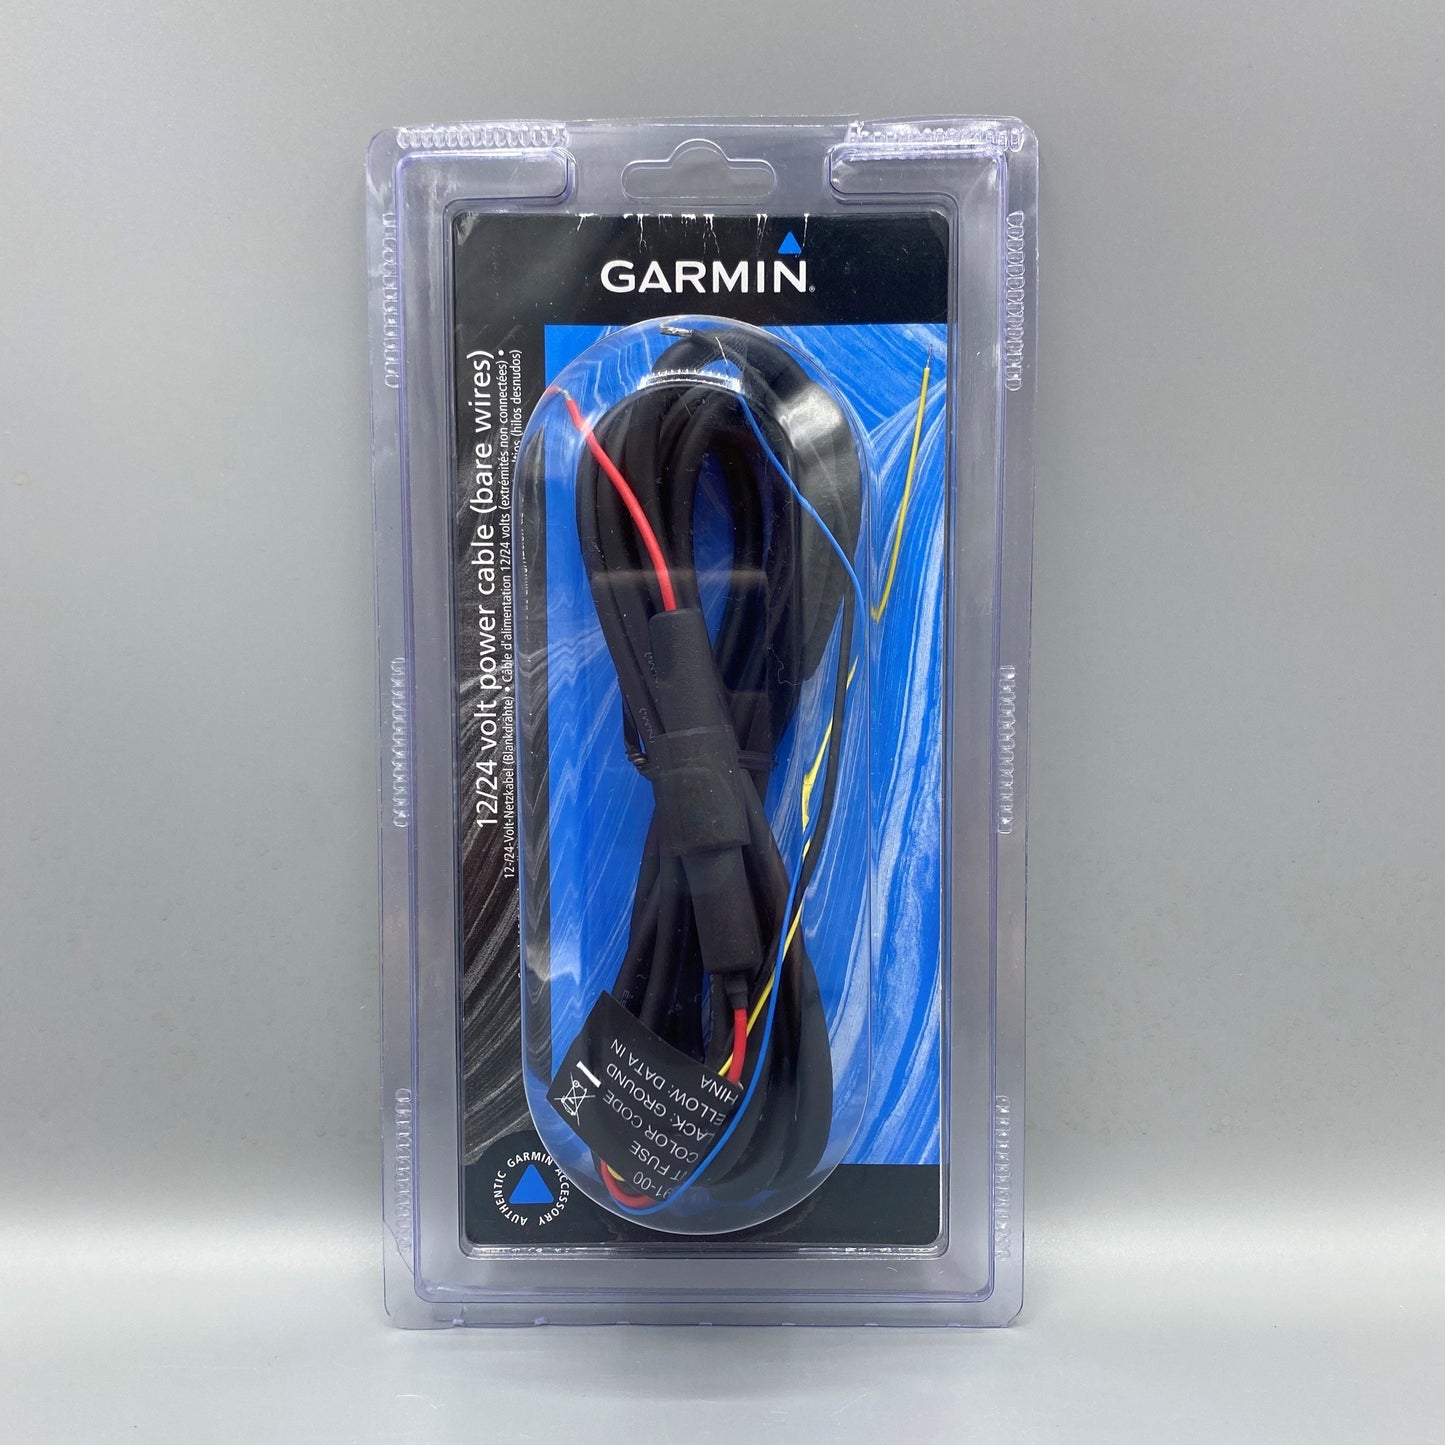 Garmin Power/Data Cable, 695/696 - Part Number: 010-11206-15 - New Surplus